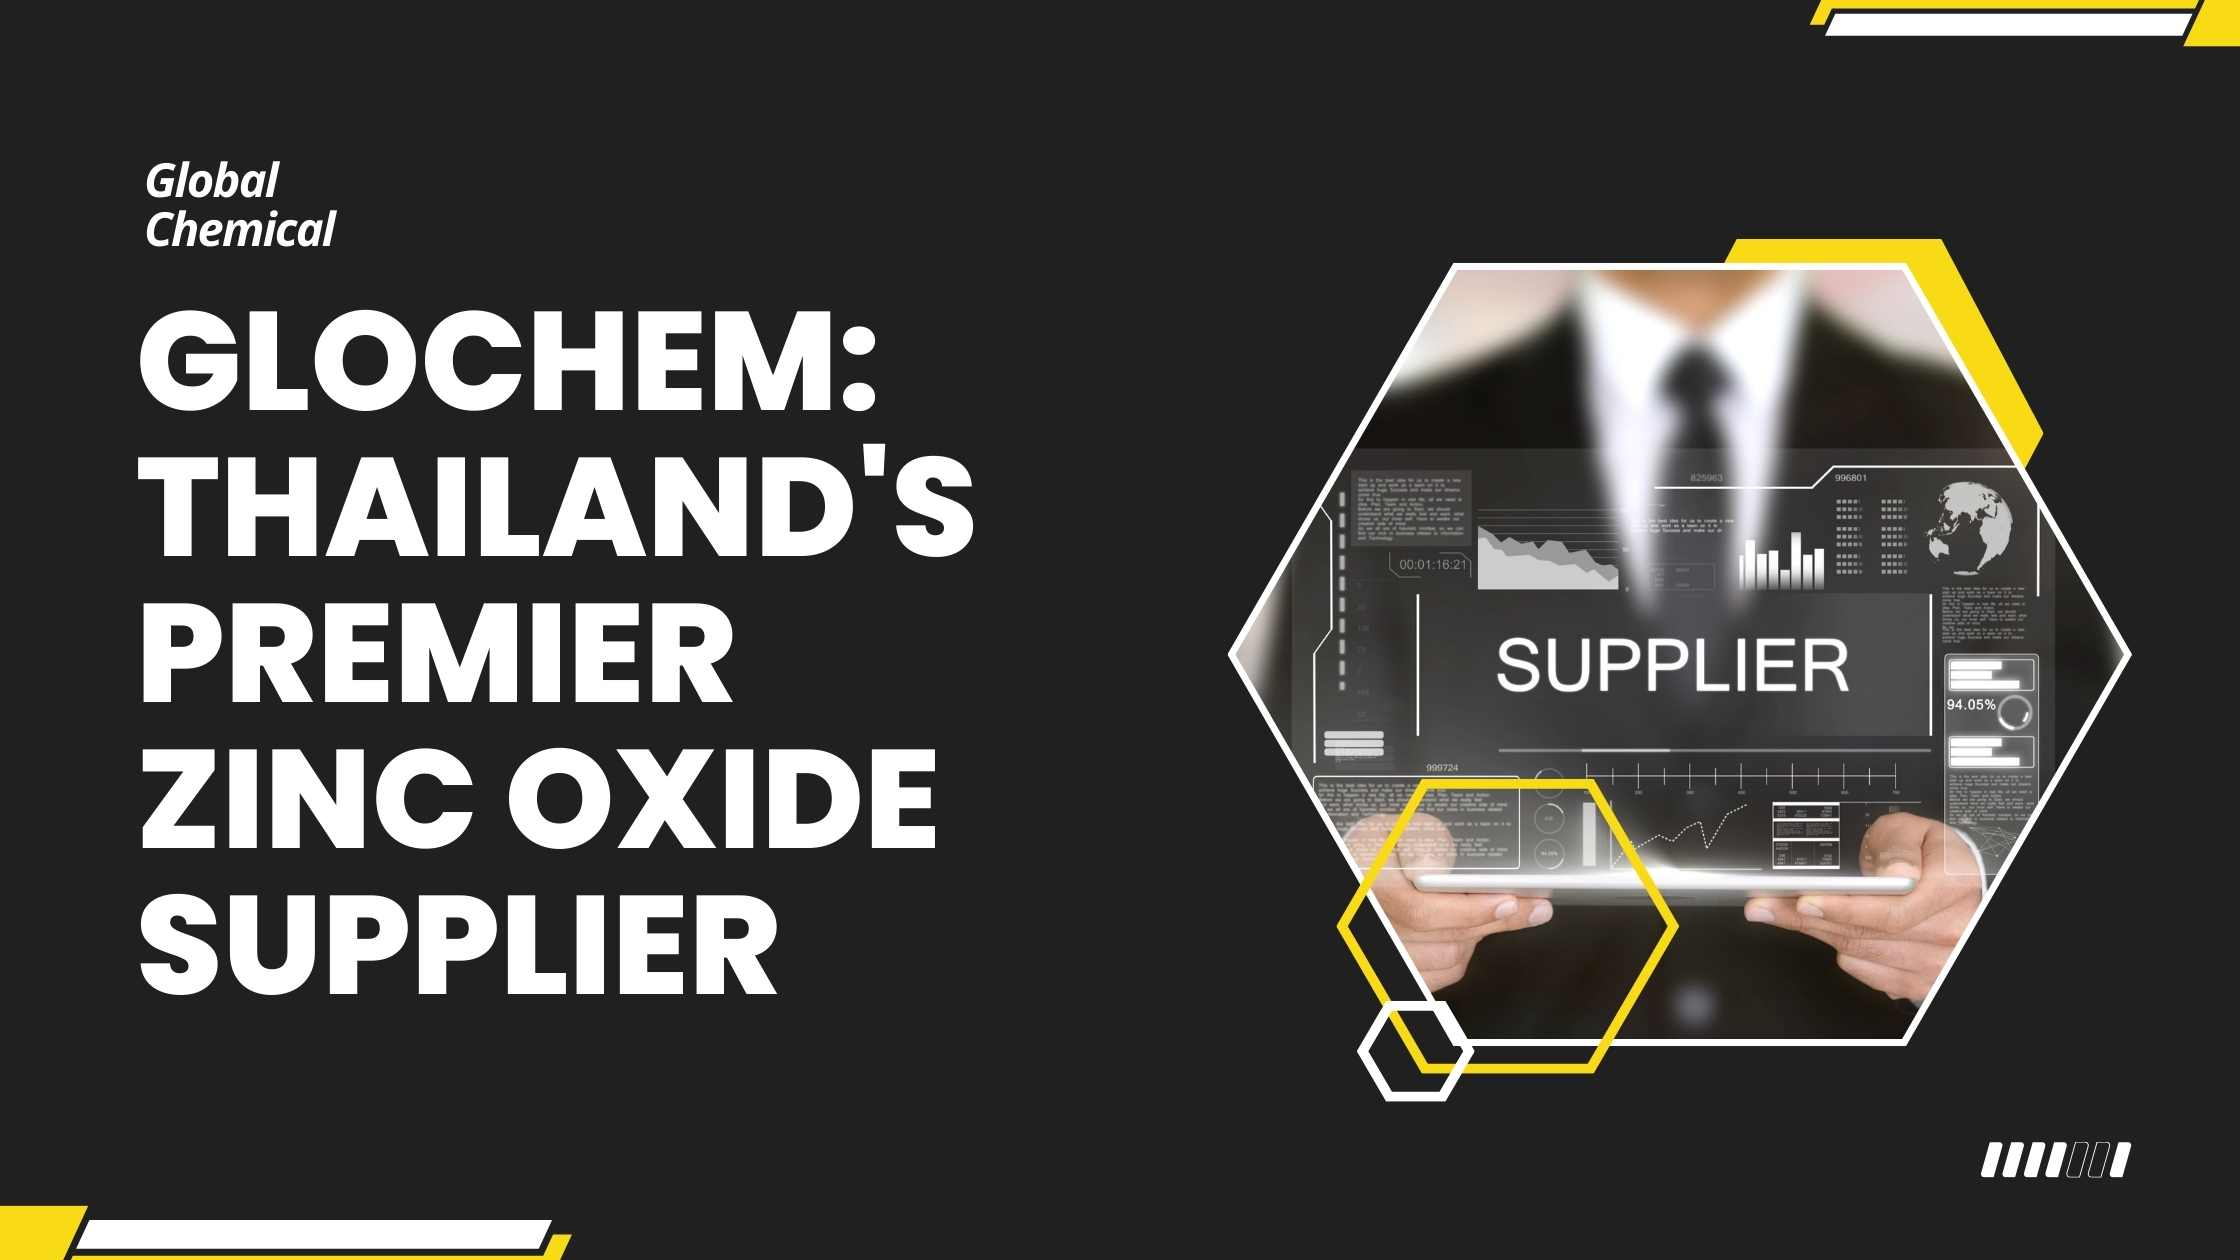 Glochem: Thailand's Premier Zinc Oxide Supplier